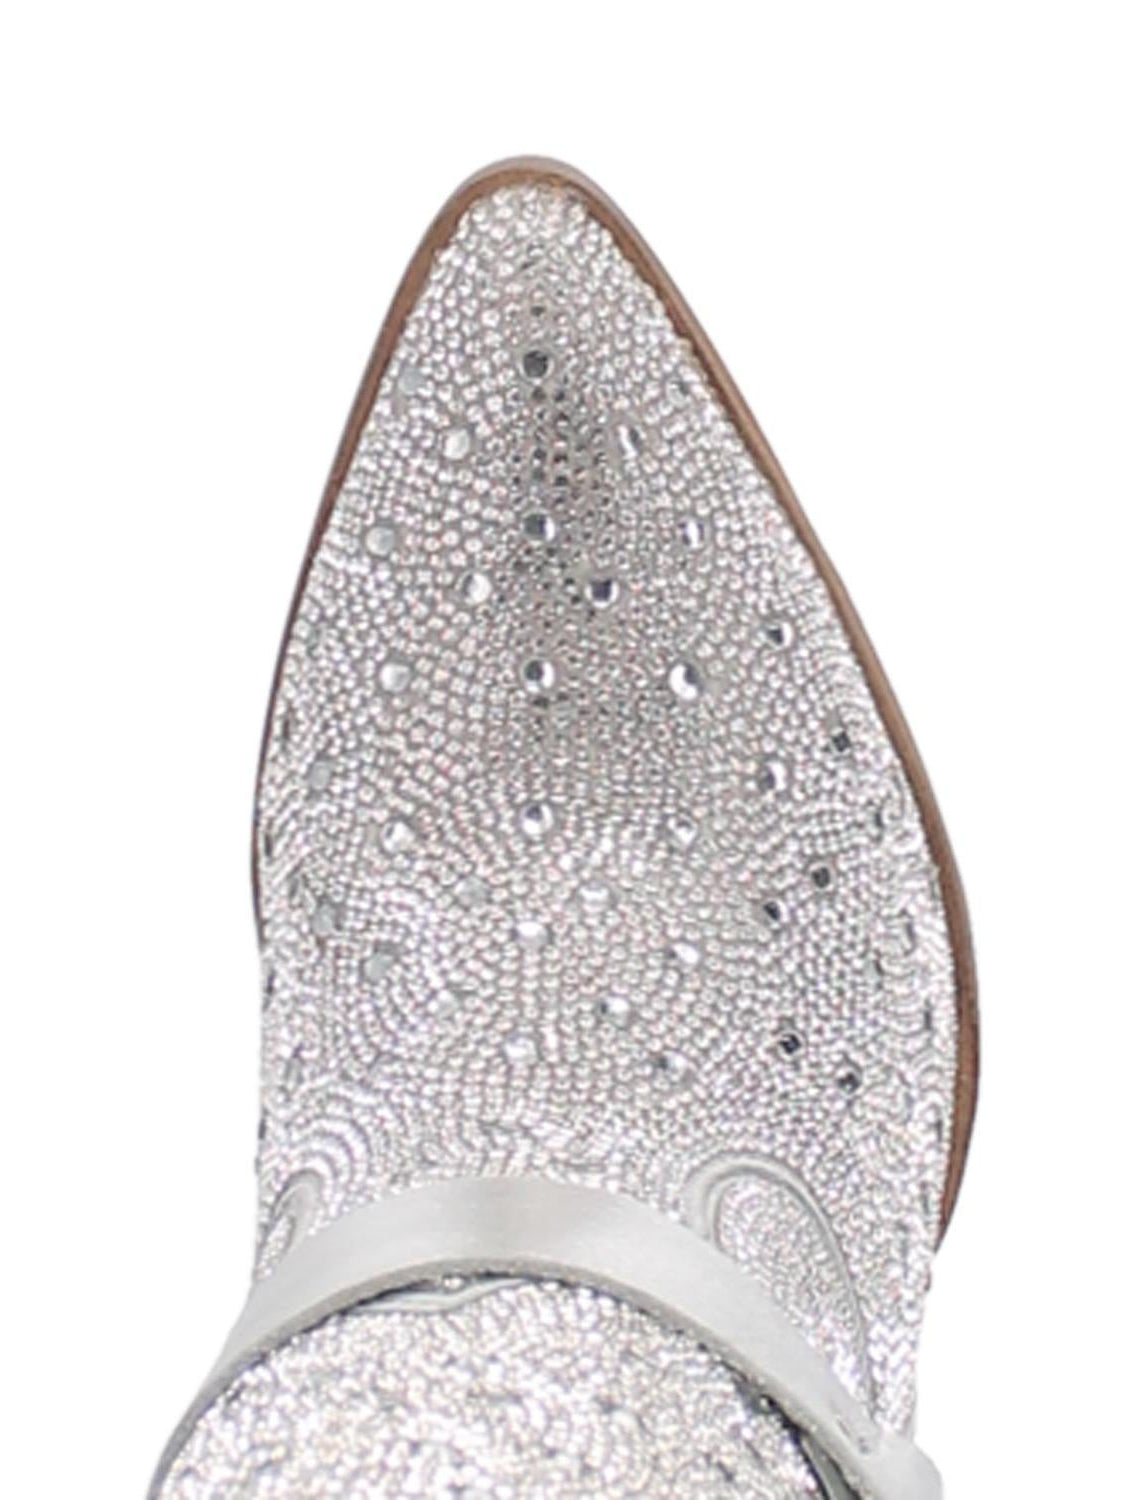 Crown Jewel Boot by Dan Post - Silver